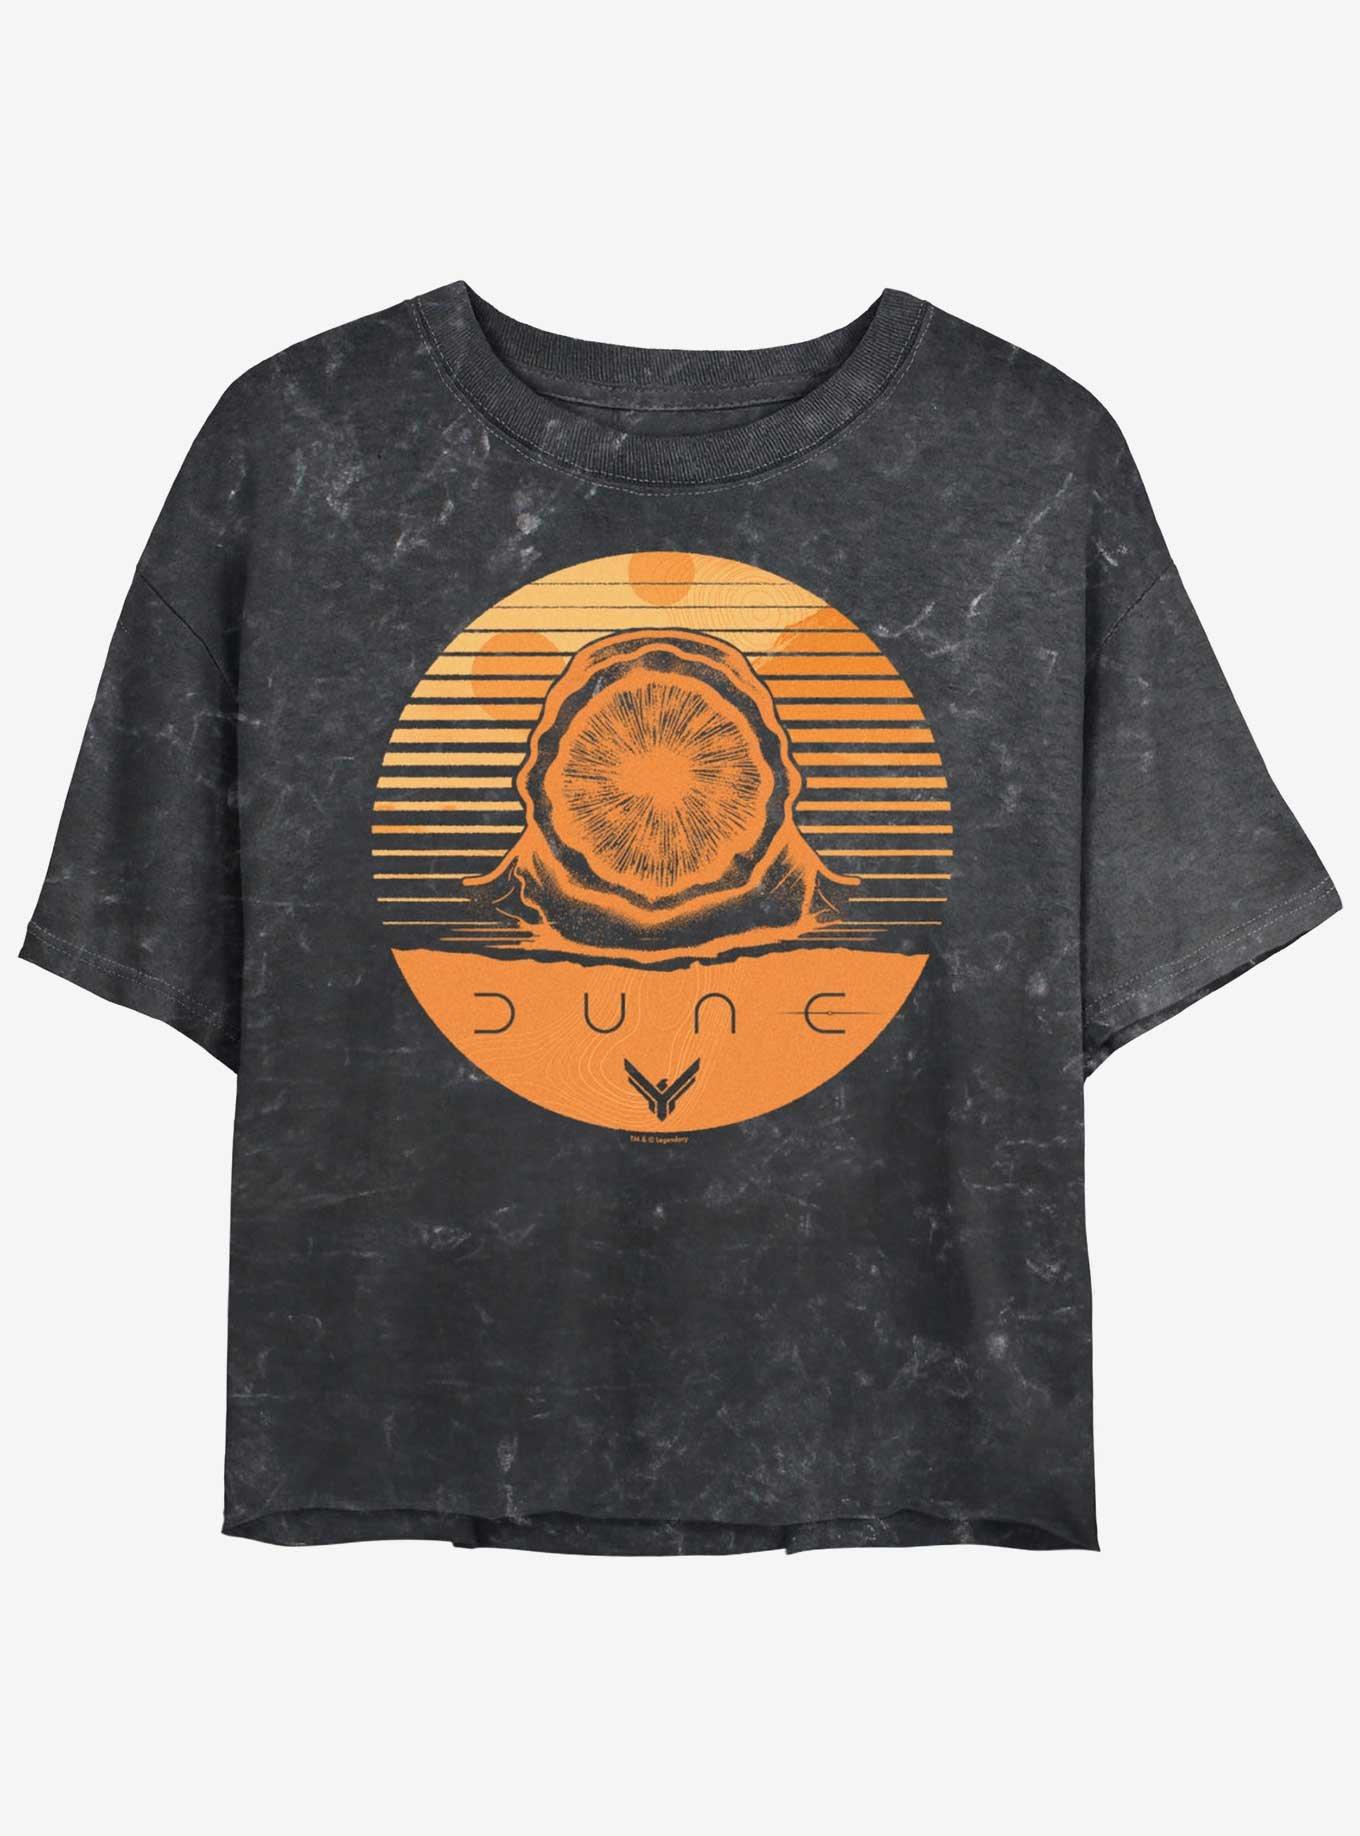 Dune Arrakis Sandworm Stamp Mineral Wash Womens Crop T-Shirt, BLACK, hi-res